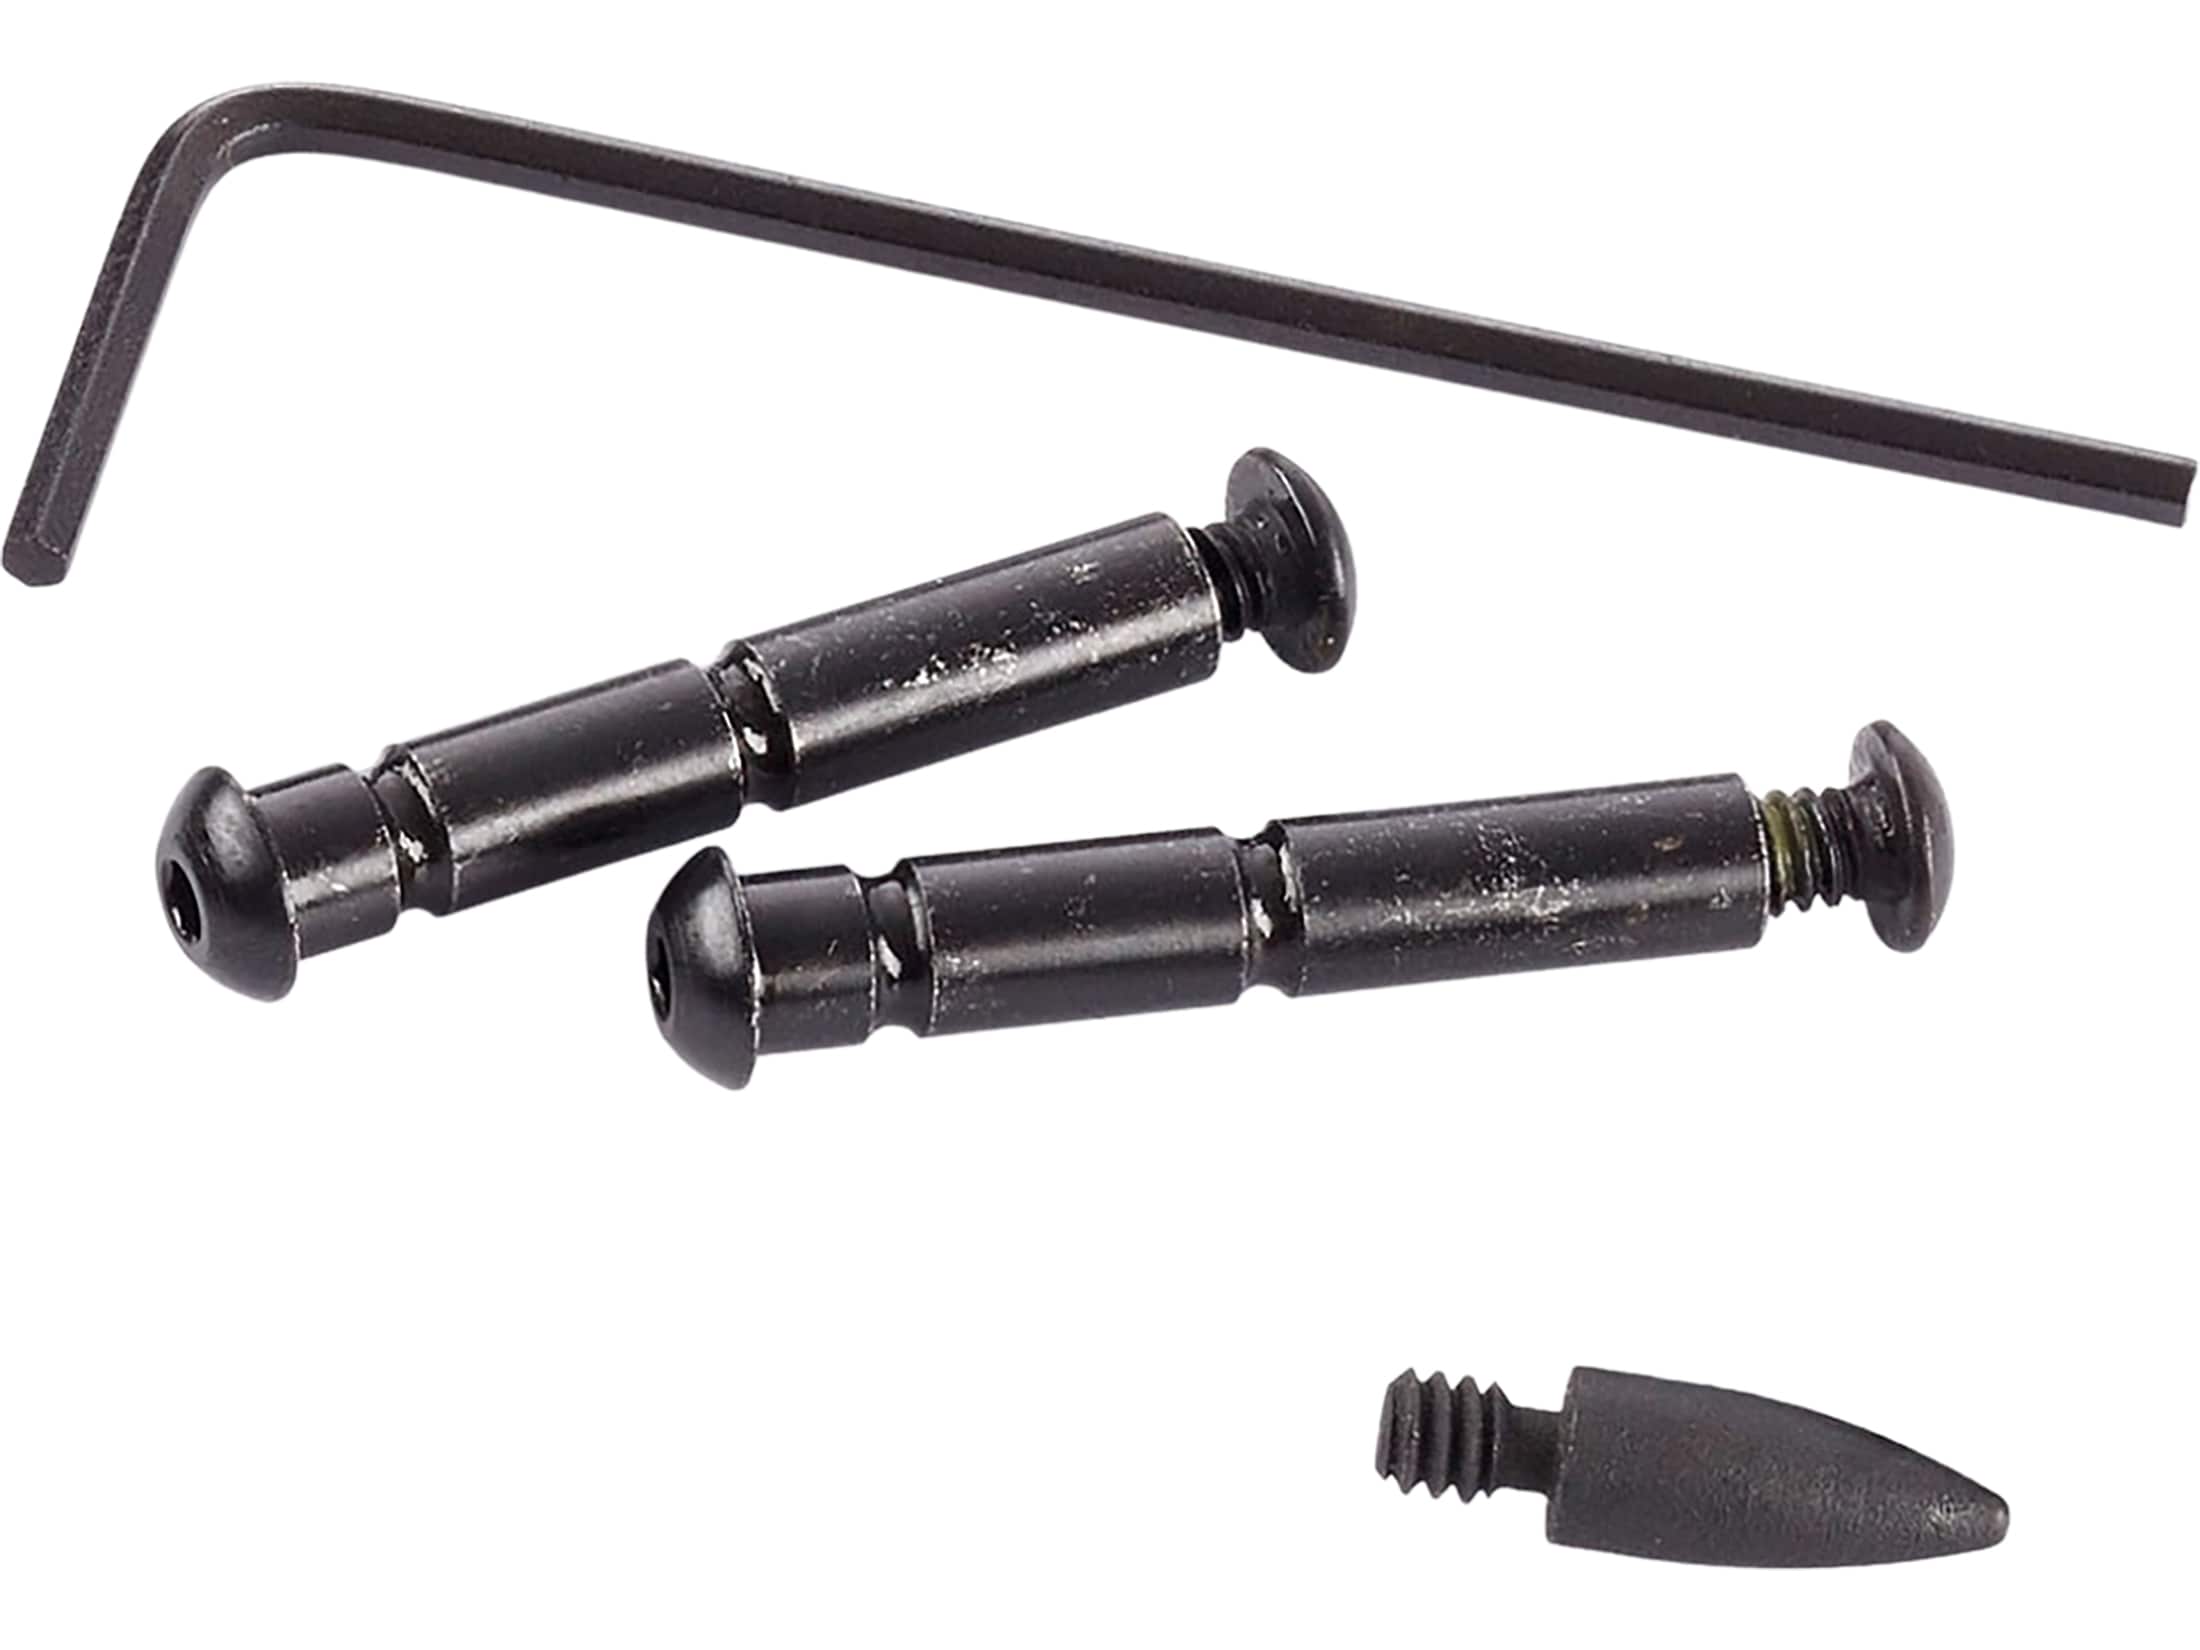 AR15 Trigger & Hammer Stainless Steel Anti-Walk Pins